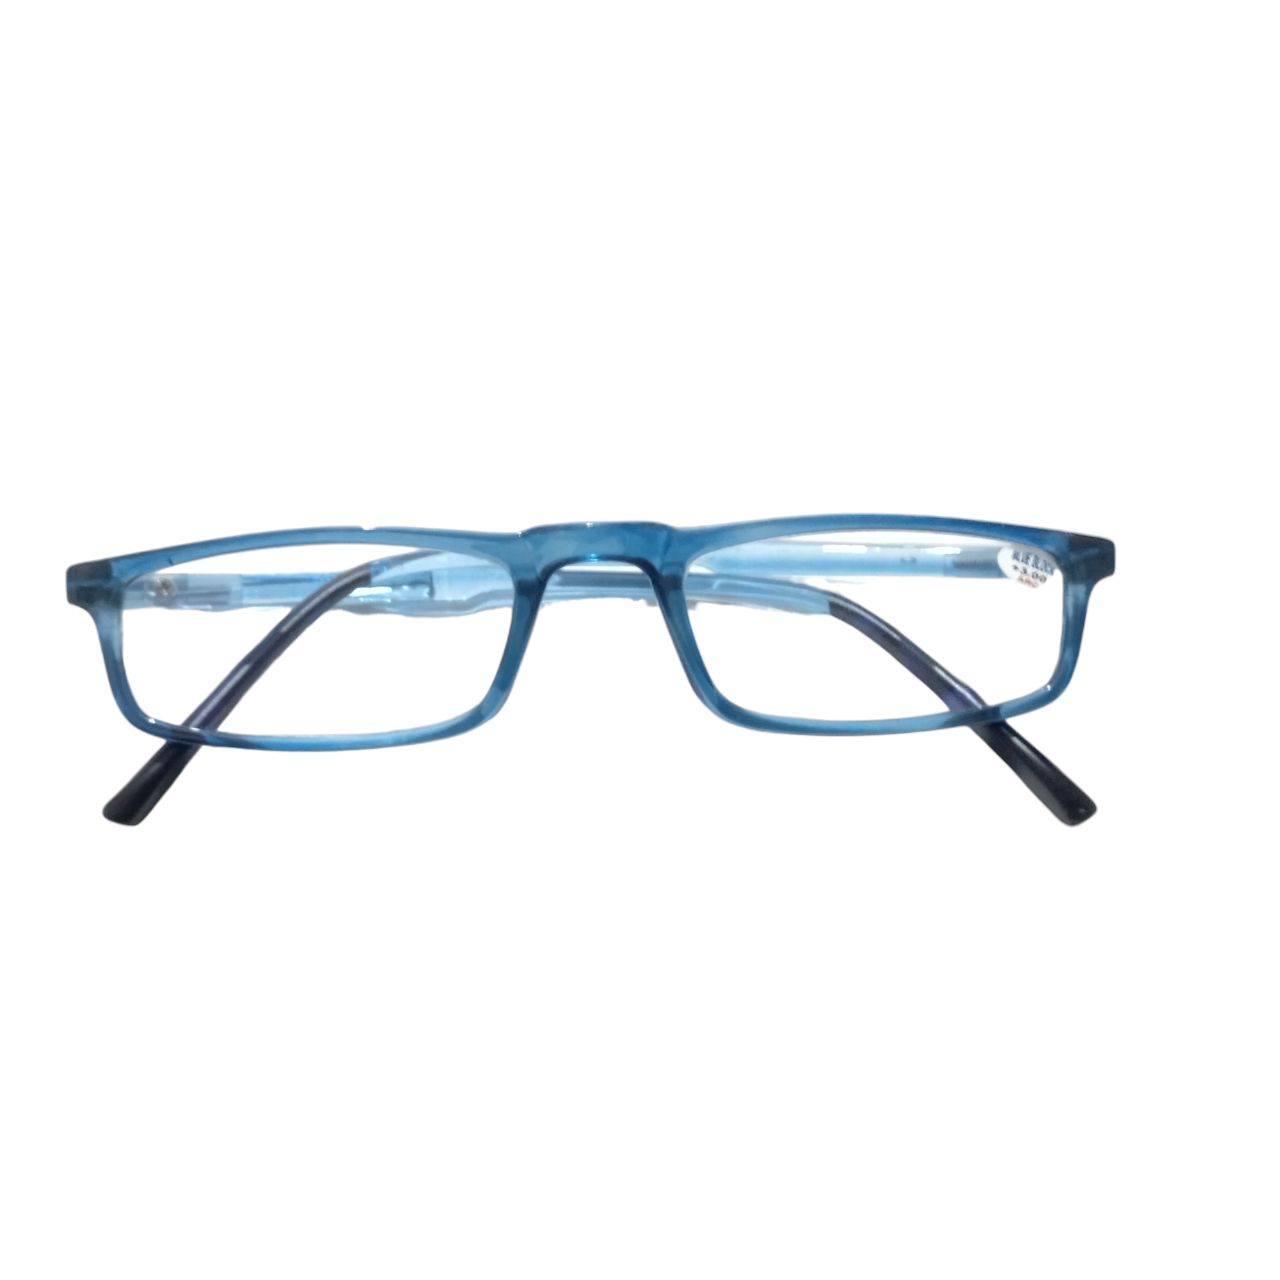 +1.00 Power Computer Reading Glasses with Anti Glare Blue Light Lenses